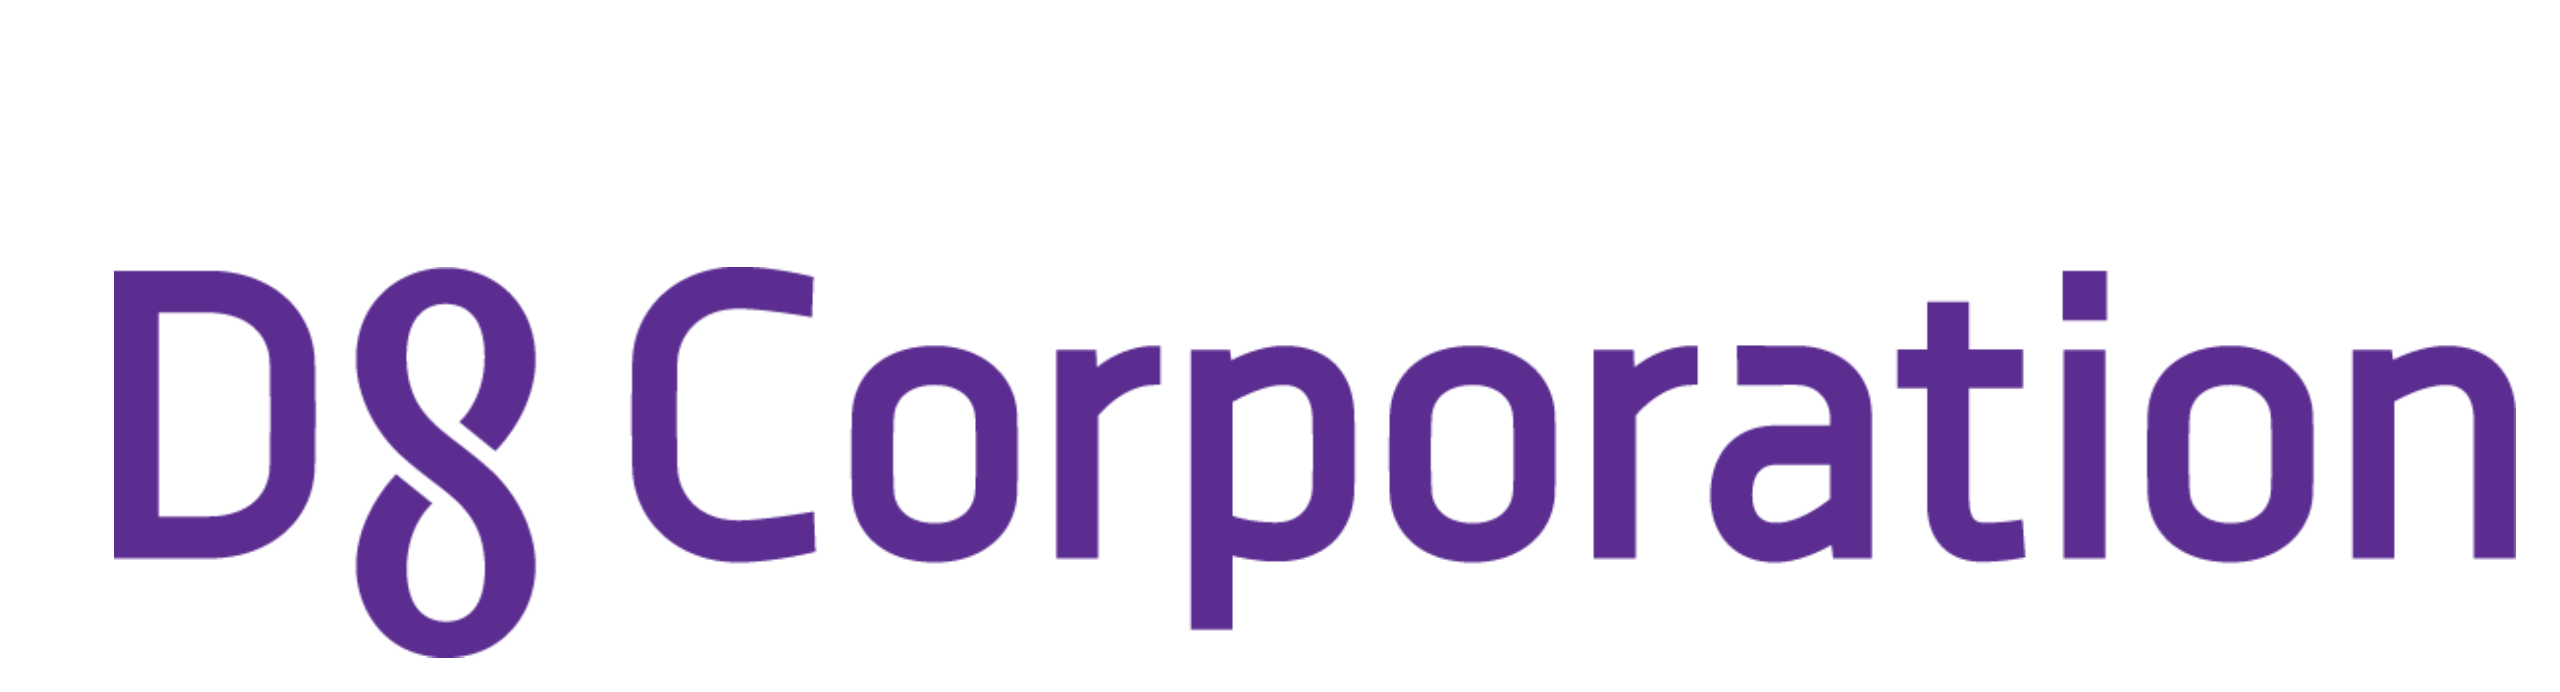 D8-corporation logo